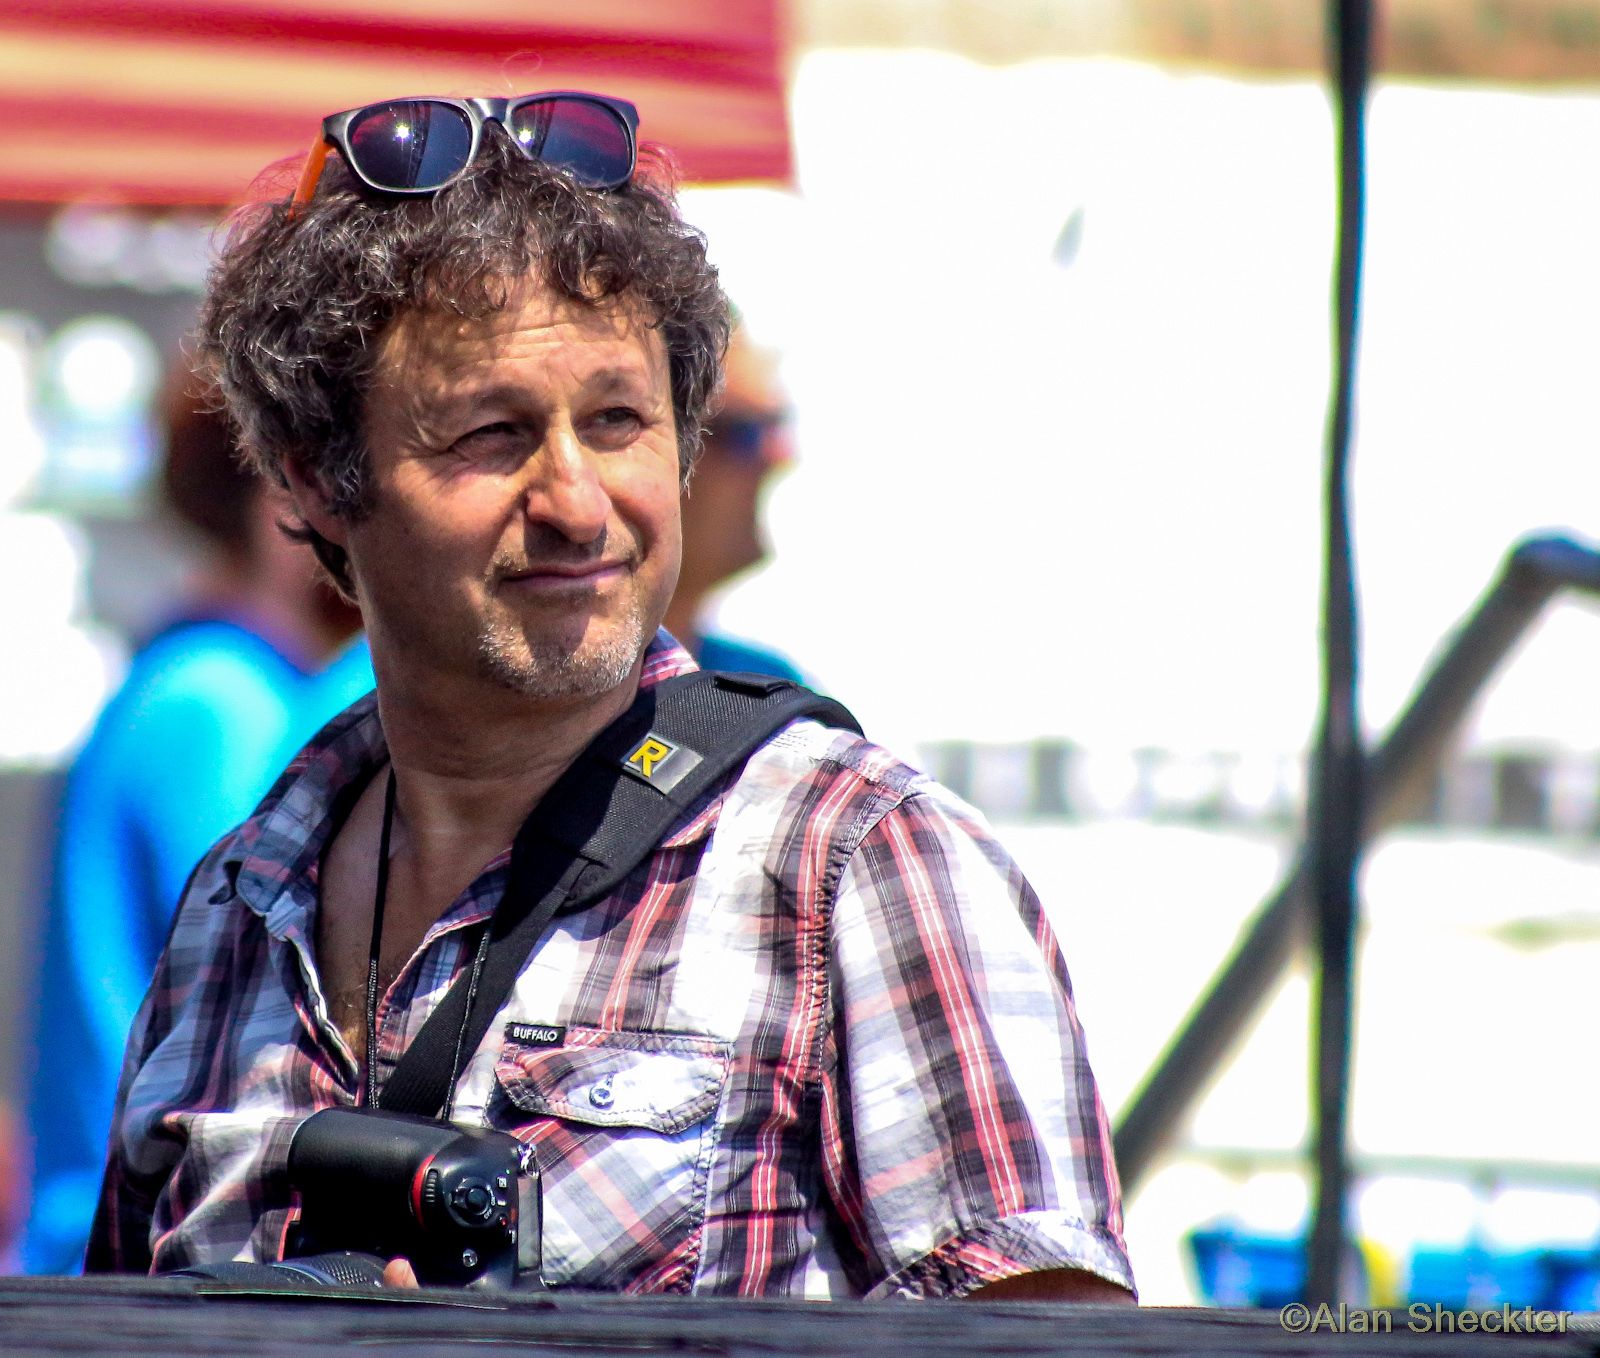 Bob Minkin “on the job” at the Petaluma Music Festival, Petaluma, Calif., August 2016 - photo by Alan Sheckter